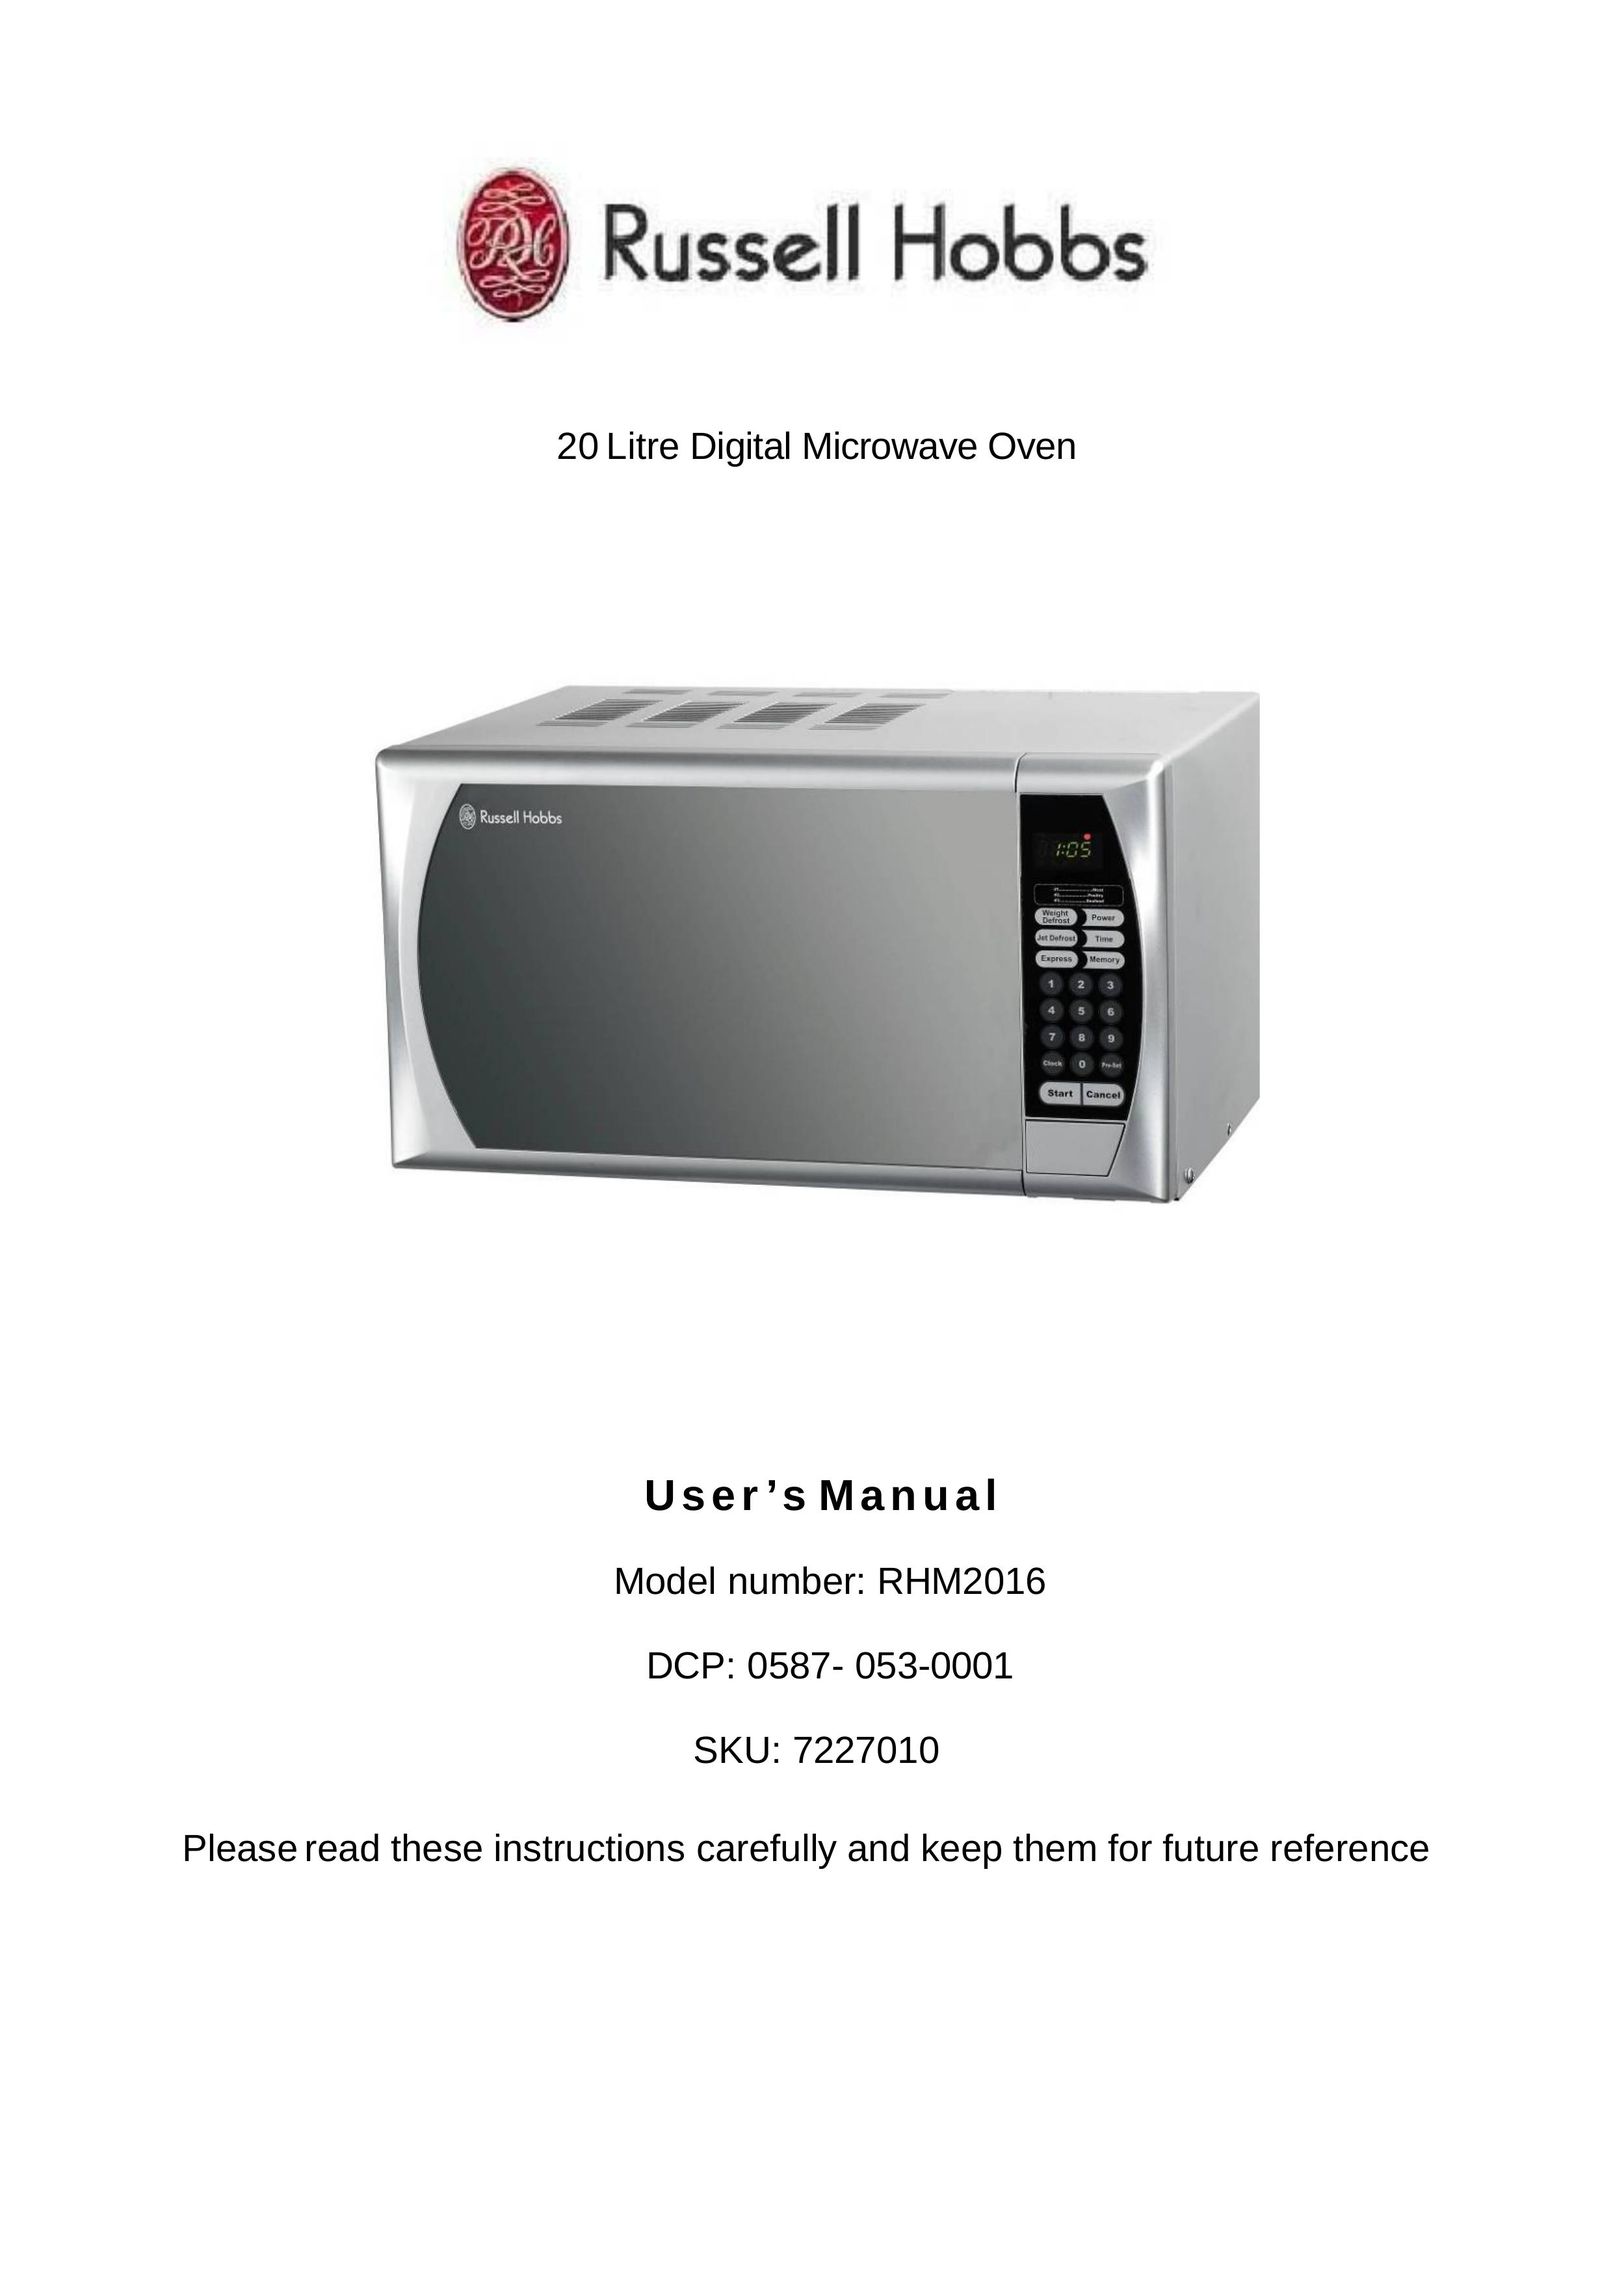 Russell Hobbs RHM2016 Microwave Oven User Manual